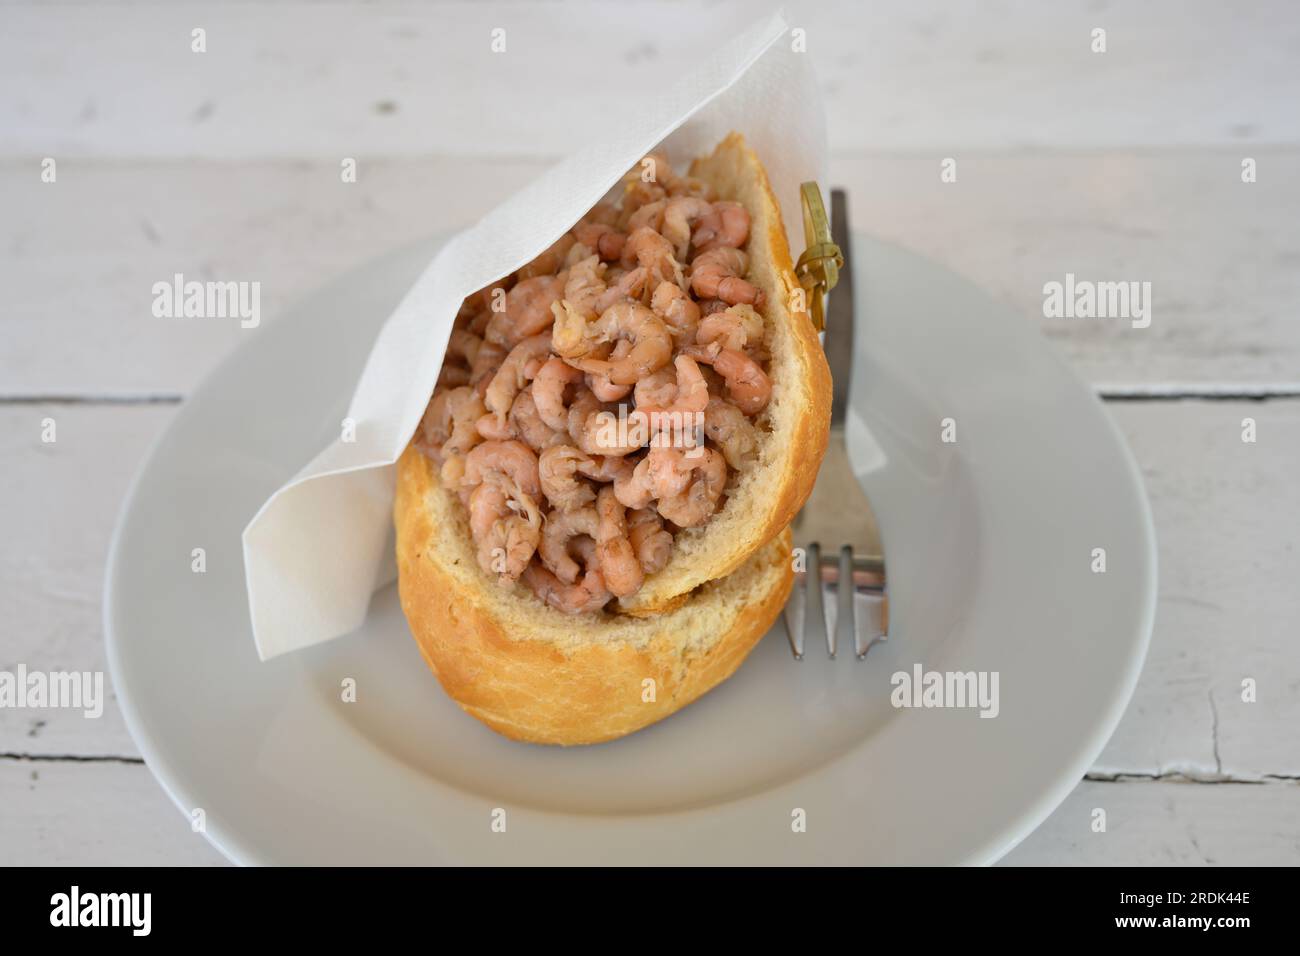 Sandwich with North Sea Crab Hamburg Style Stock Photo